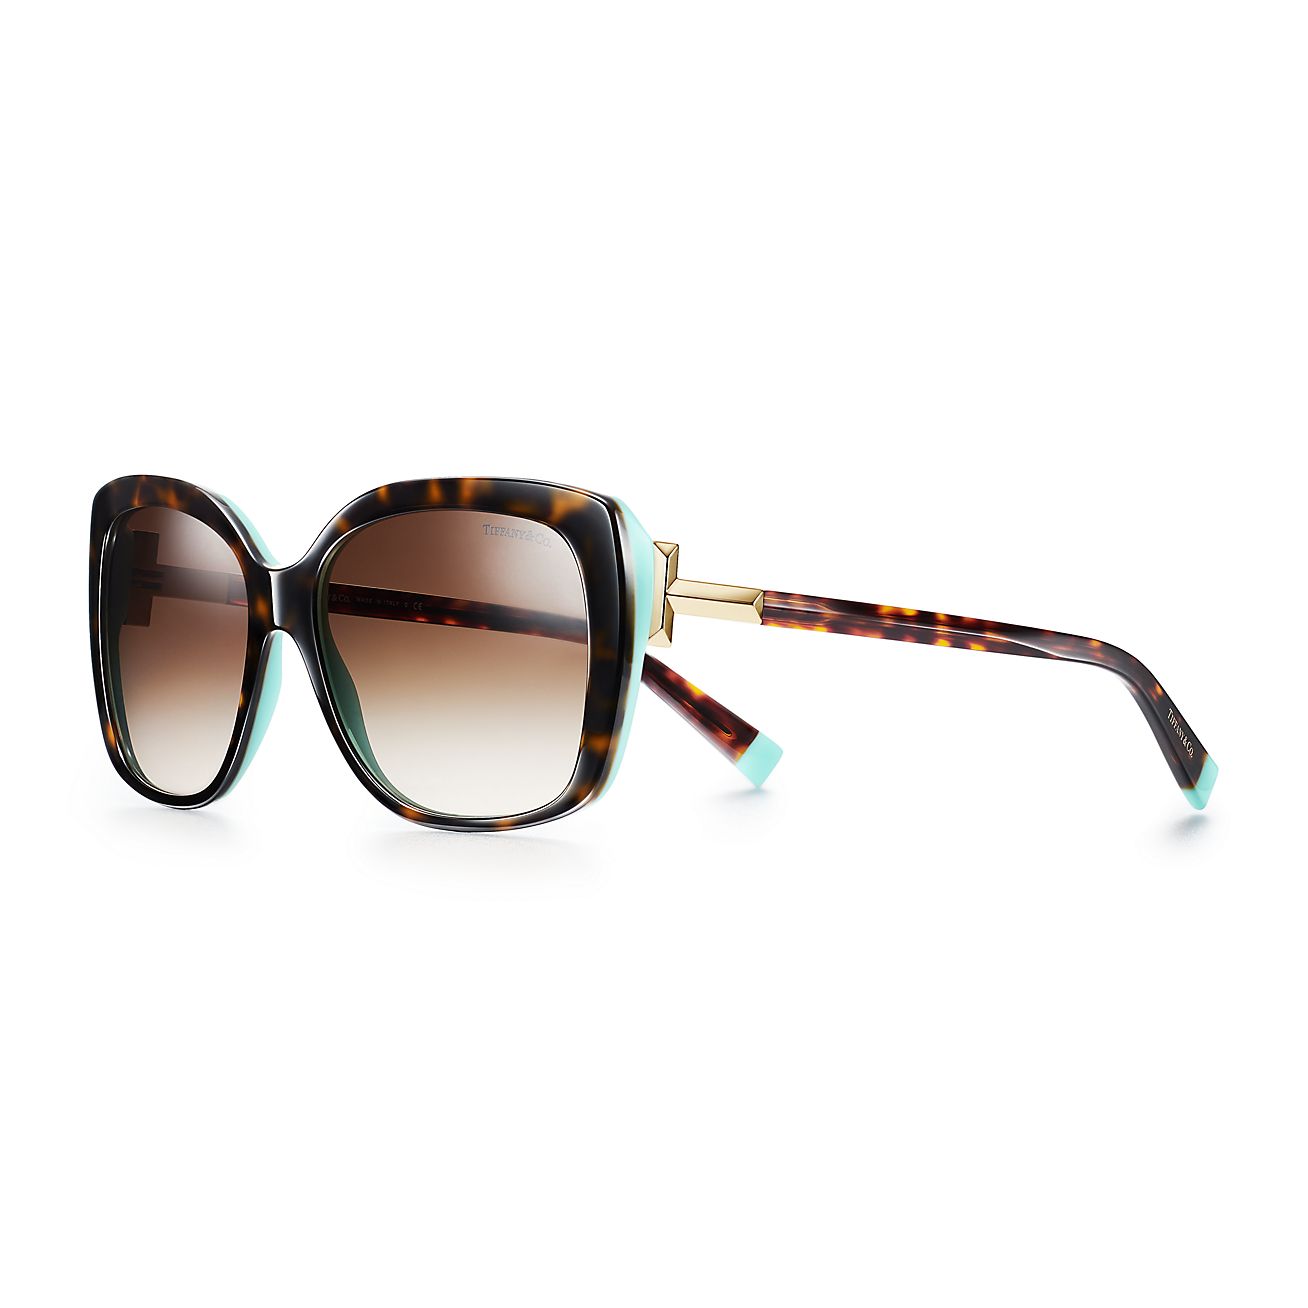 Tiffany T square sunglasses in tortoise and Tiffany Blue® acetate 